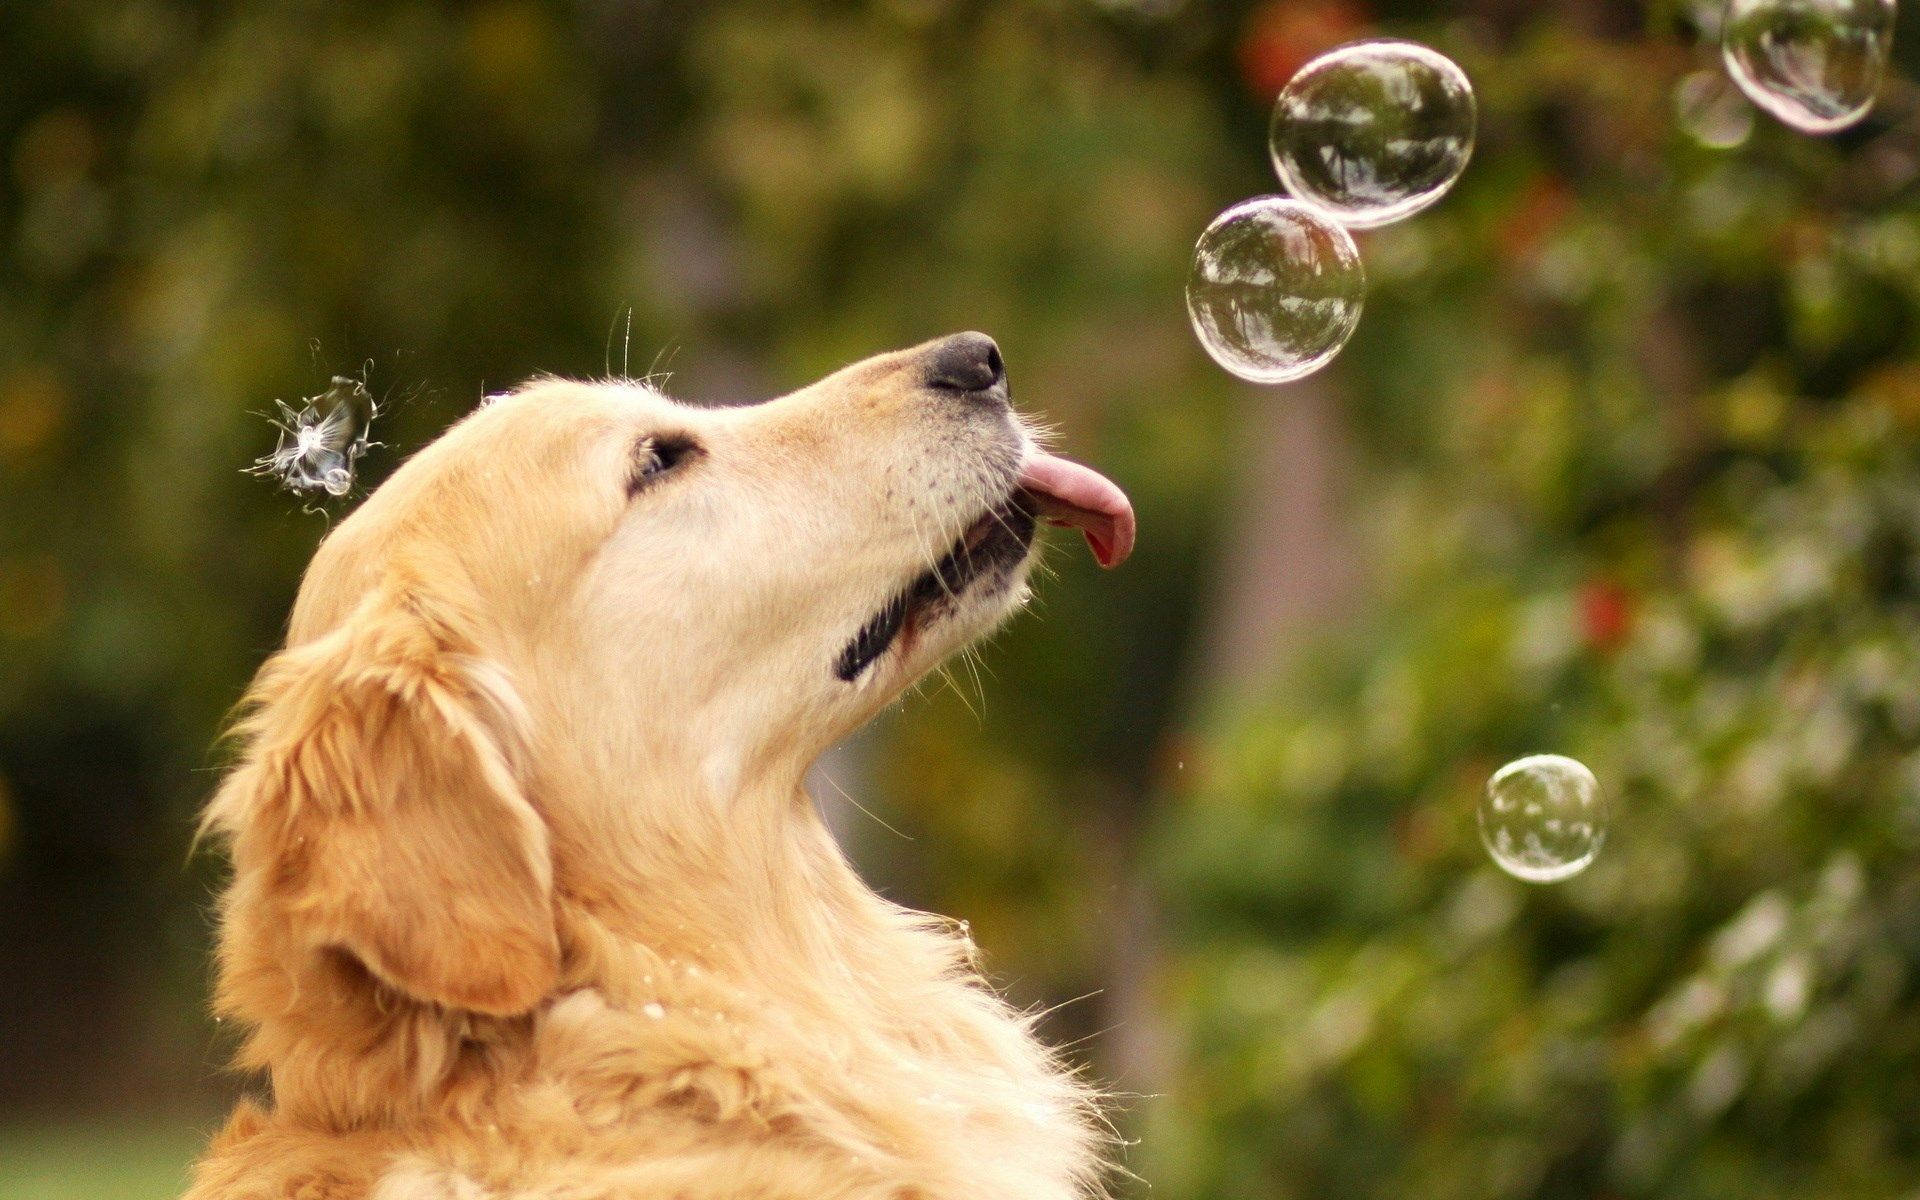 Cute dog wallpaper of golden retriever chasing bubbles in the garden